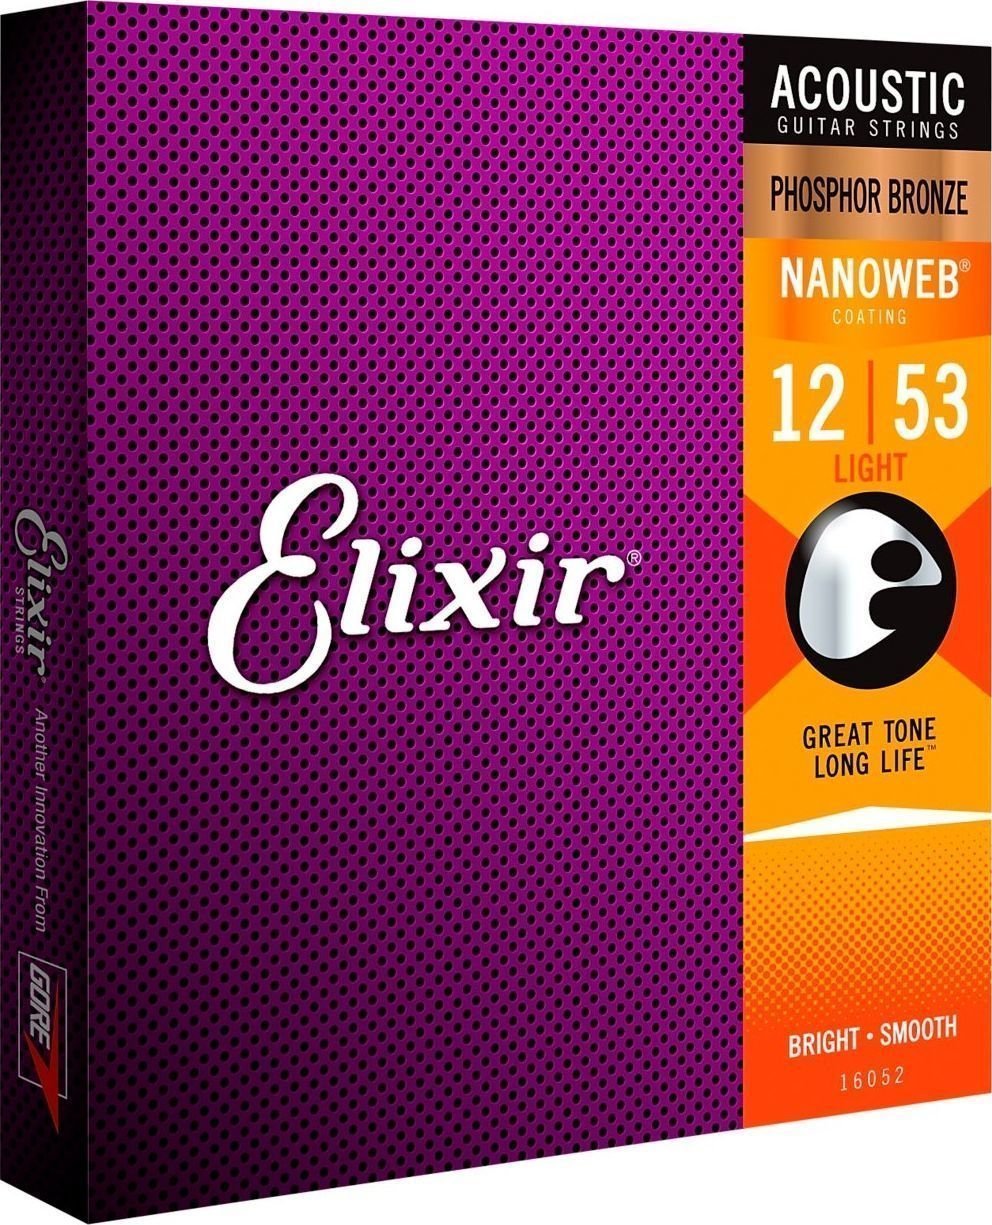 Guitar strings Elixir 16052 Nanoweb 12-53